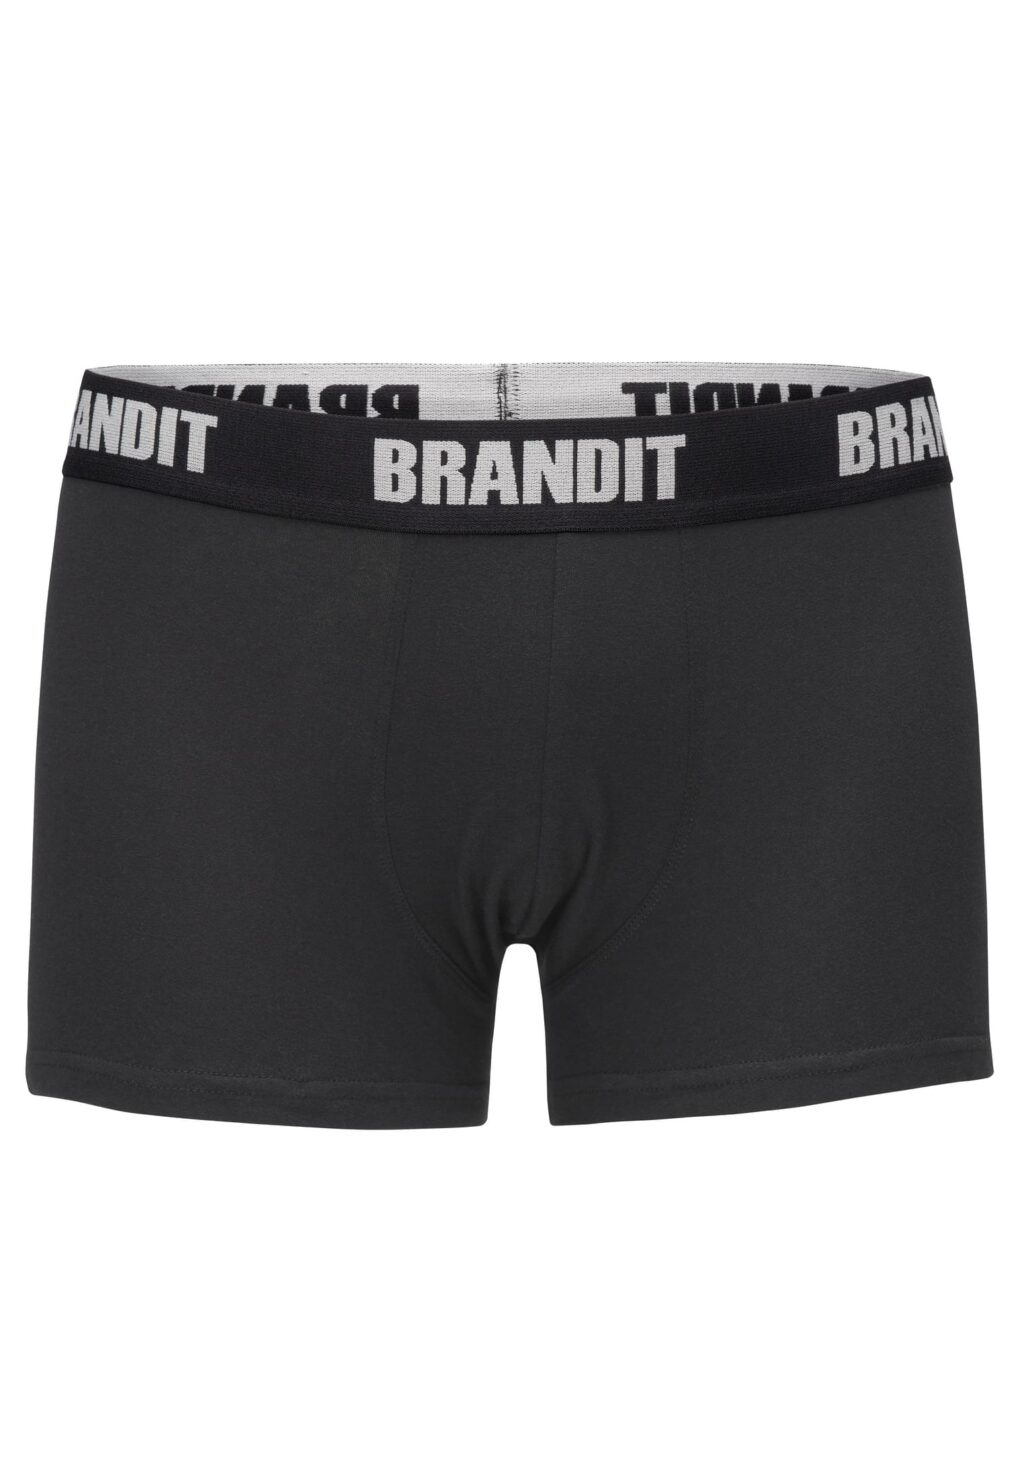 Brandit Boxershorts Logo 2-Pack wht/blk BD4501